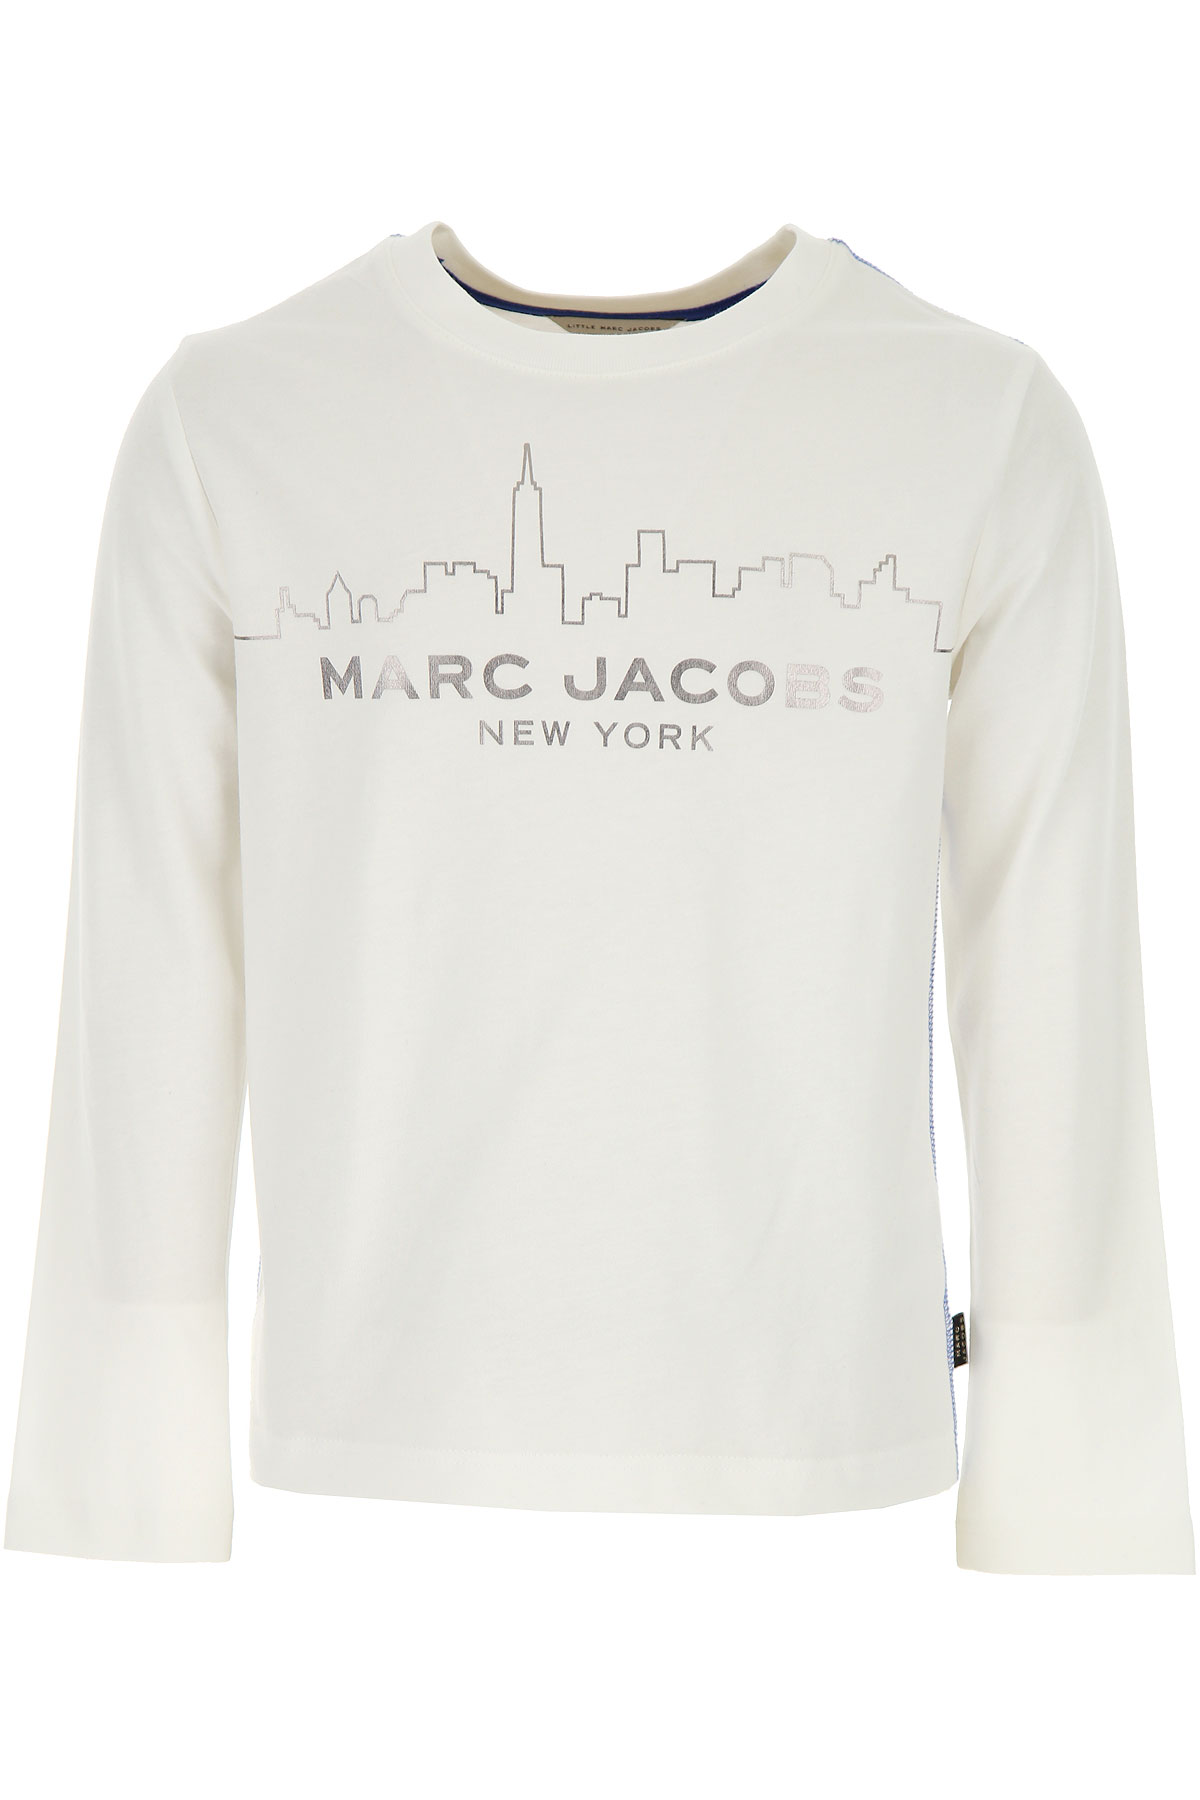 Marc Jacobs Kinder T-Shirt für Jungen Günstig im Sale, Weiss, Baumwolle, 2017, 12Y 2Y 3Y 4Y 6Y